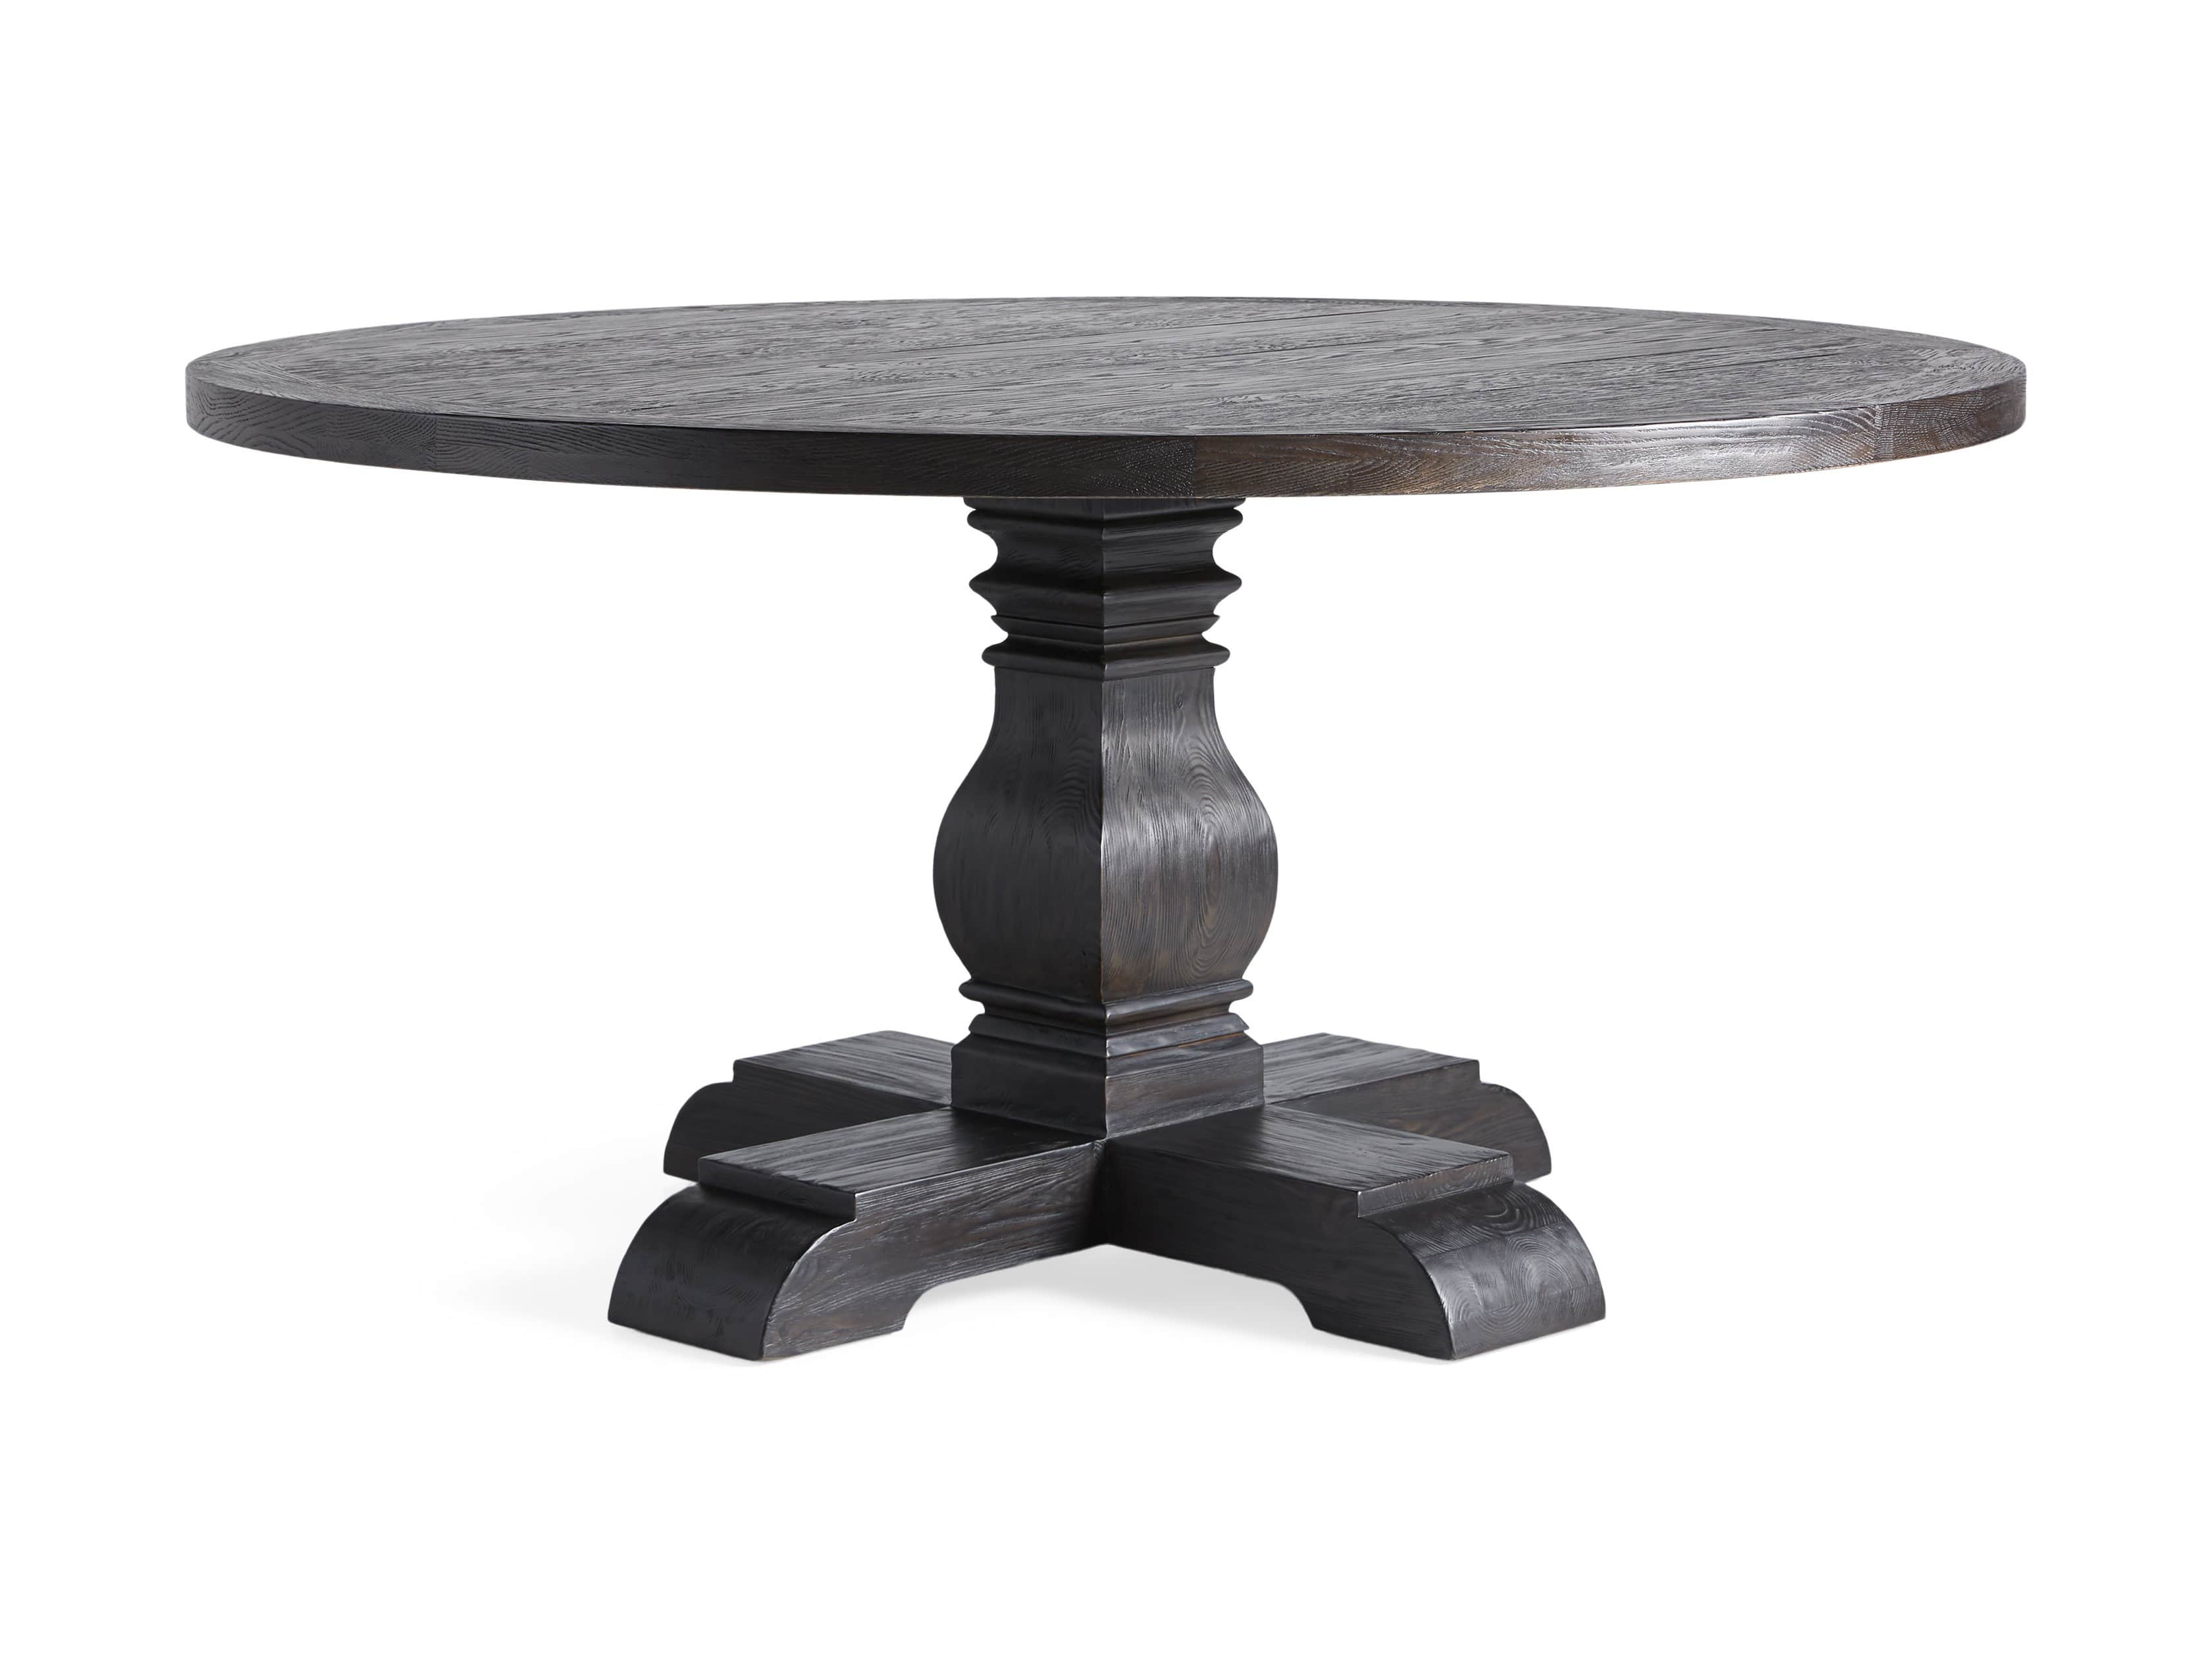 Kensington Round Dining Table Arhaus, Round Pedestal Table